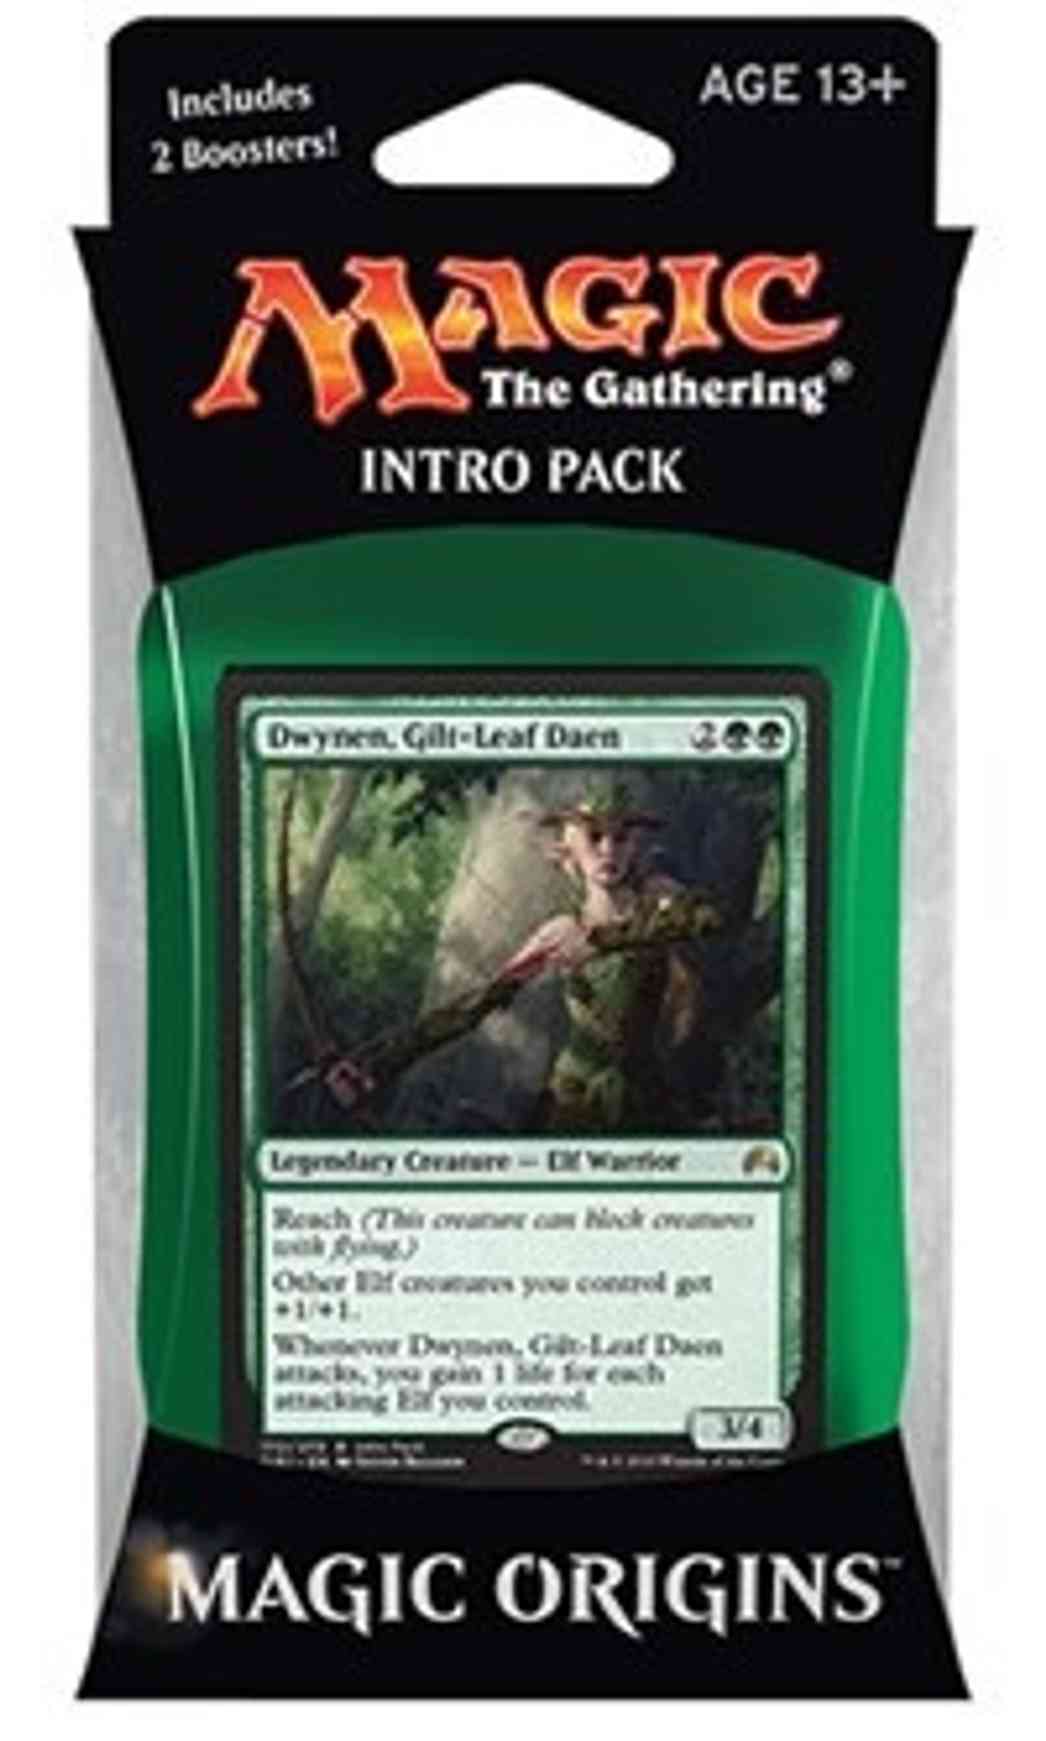 Magic Origins Intro Pack - Green magic card front